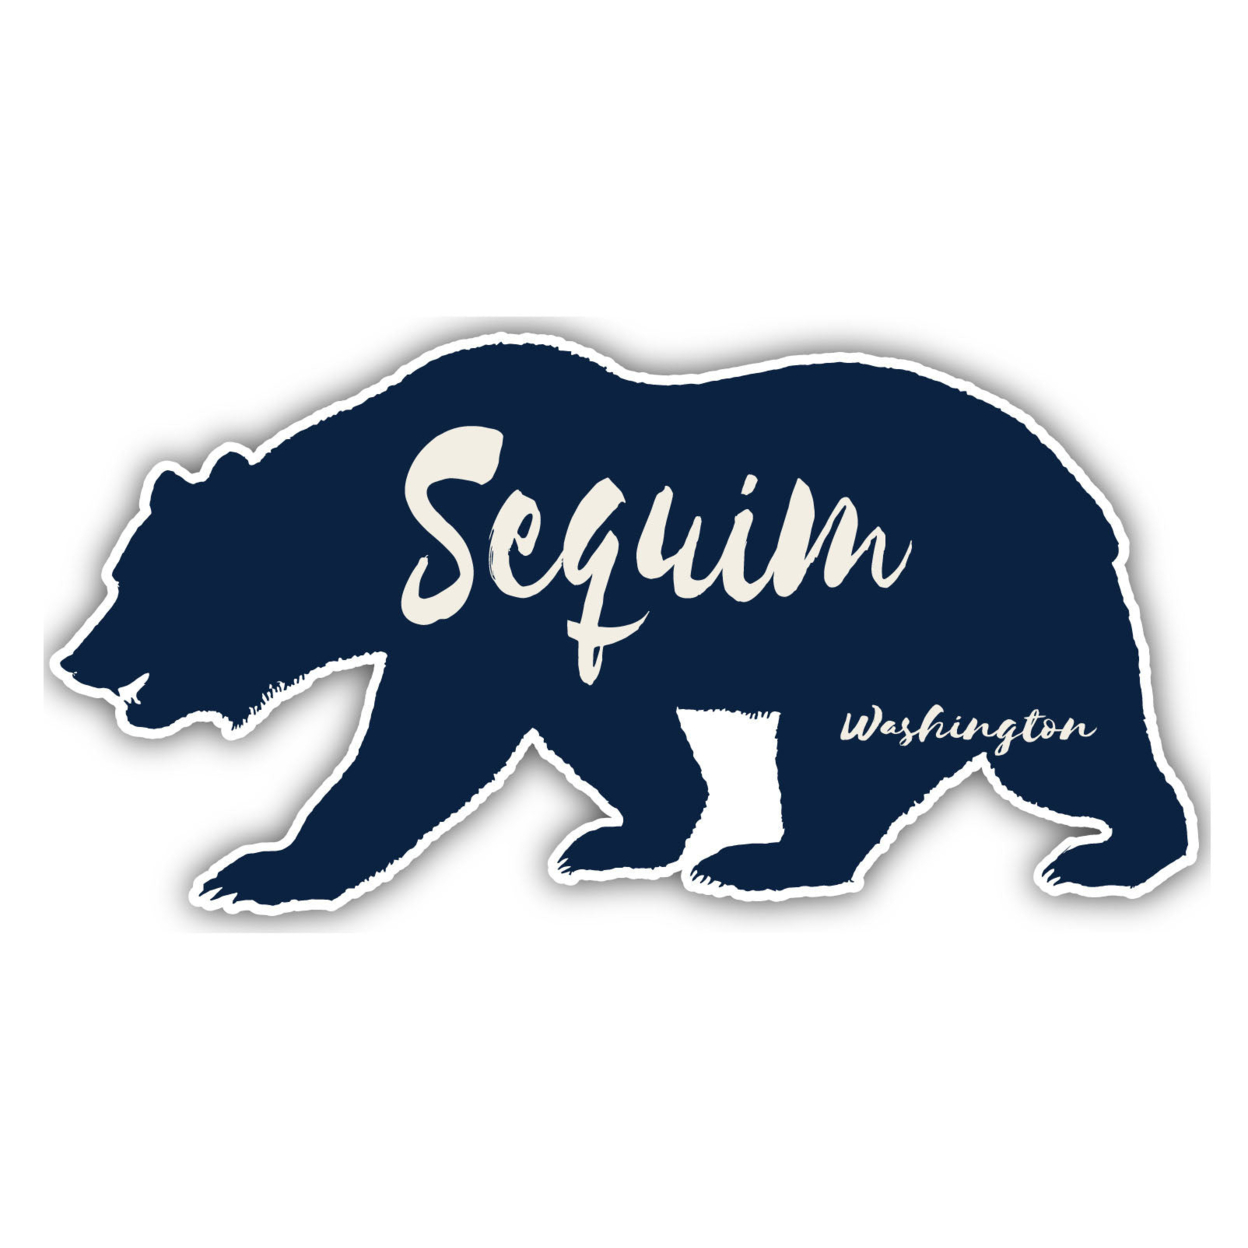 Sequim Washington Souvenir Decorative Stickers (Choose Theme And Size) - Single Unit, 4-Inch, Bear